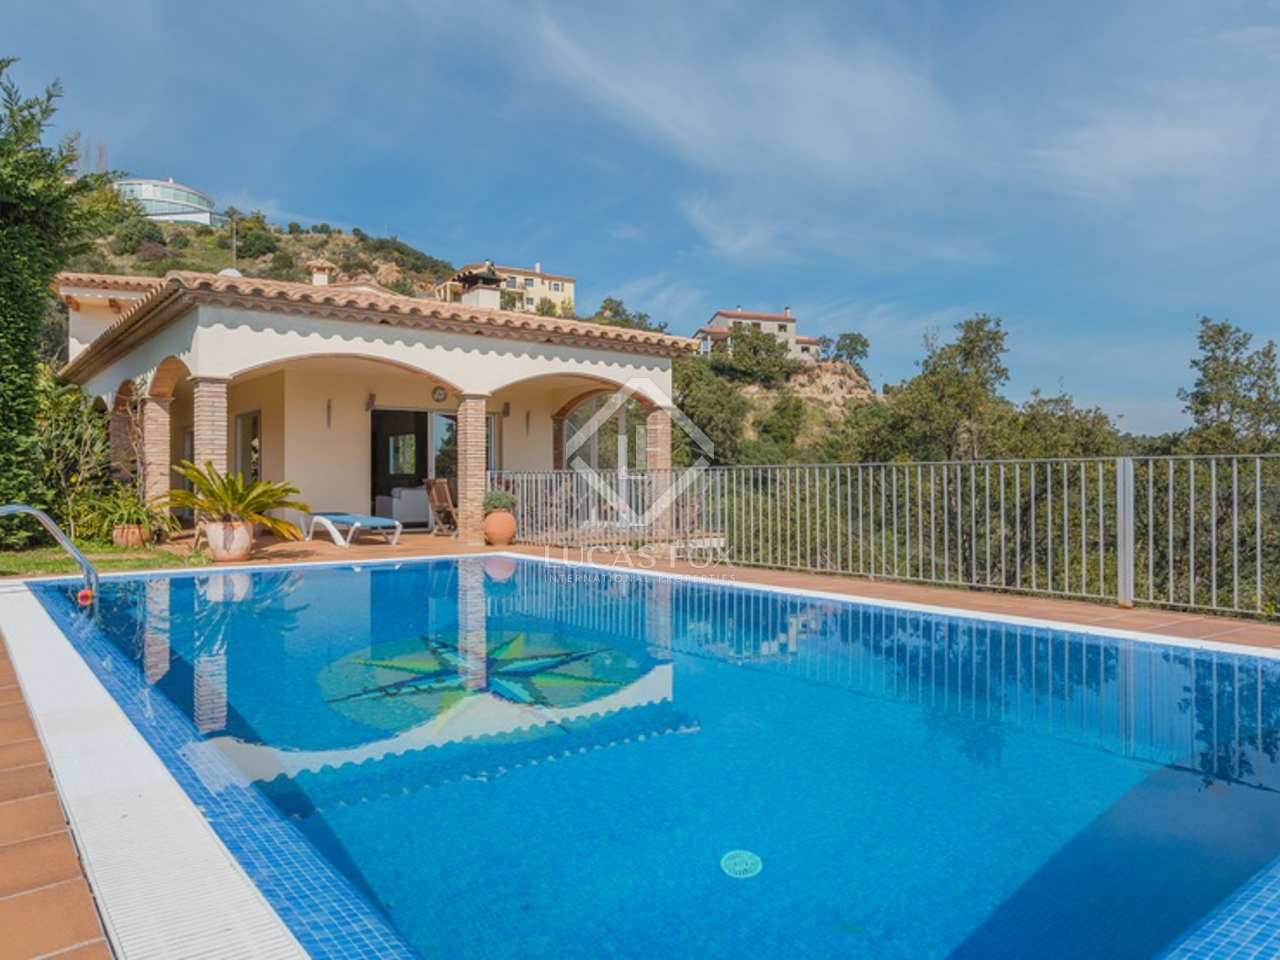 Villa en venta en Platja d'Aro, en la Costa Brava